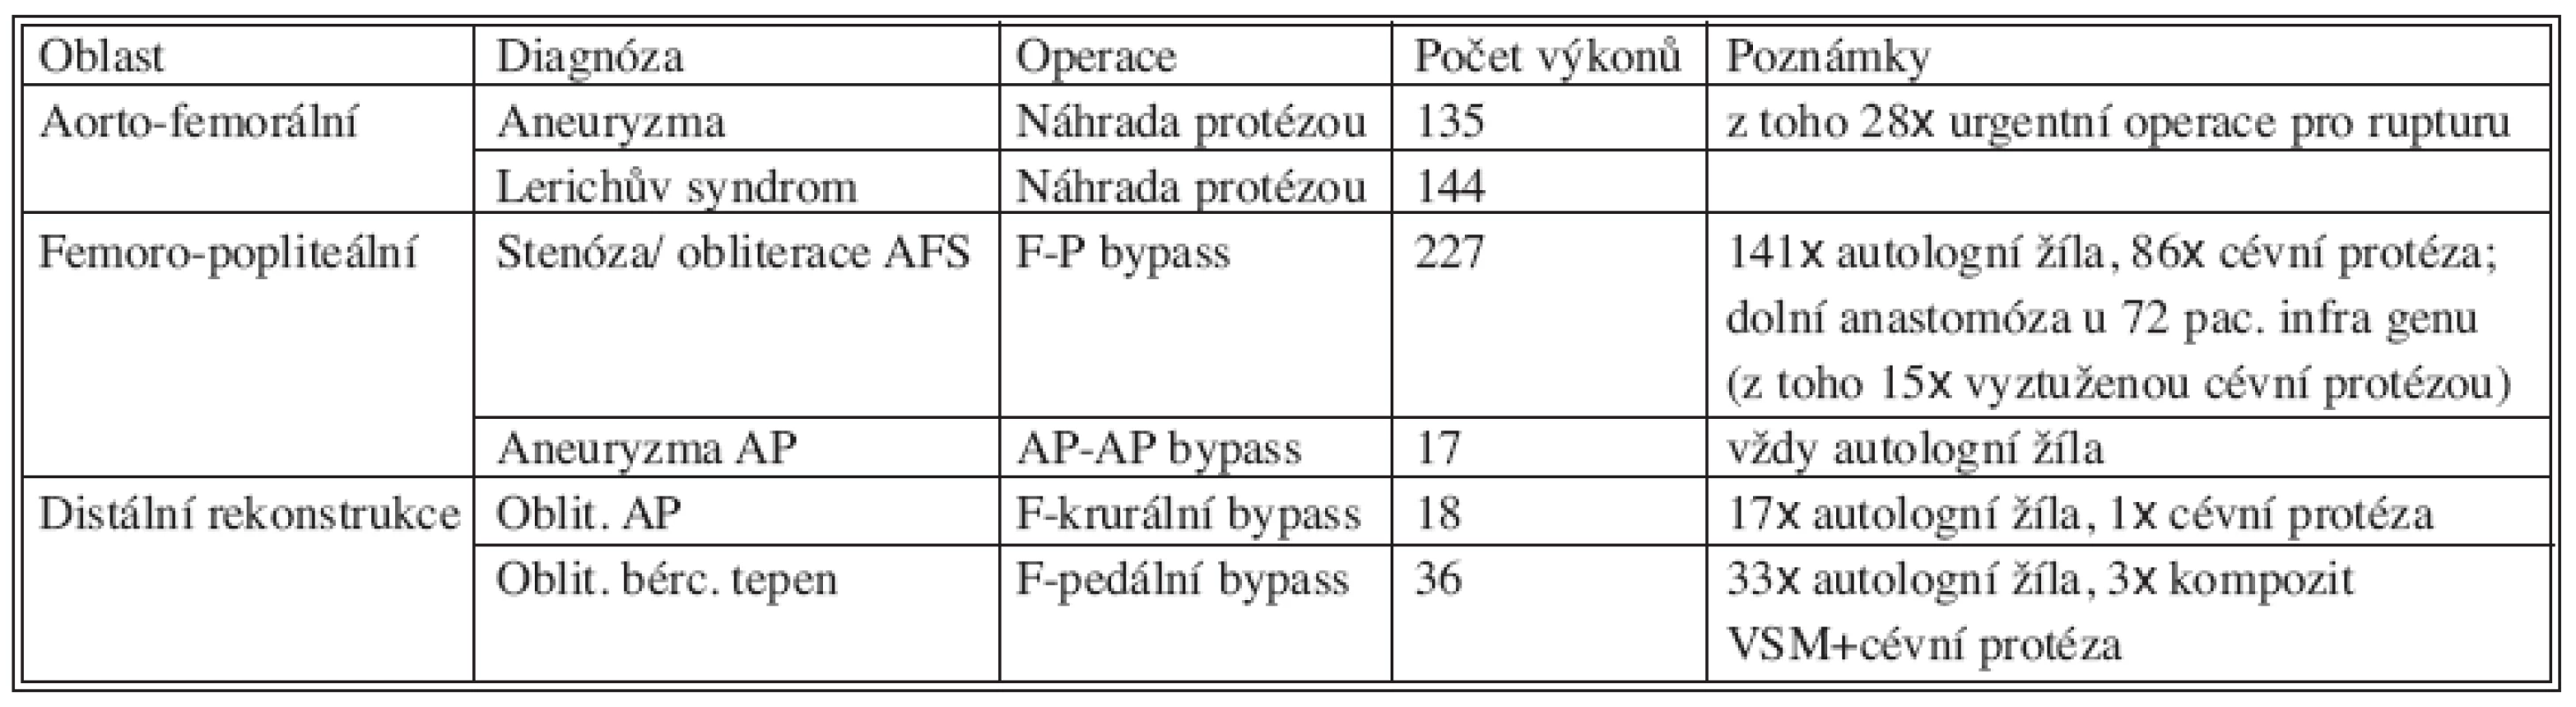 Počty operací 2003–2005
Tab 1. Numbers of procedures during 2003–2005